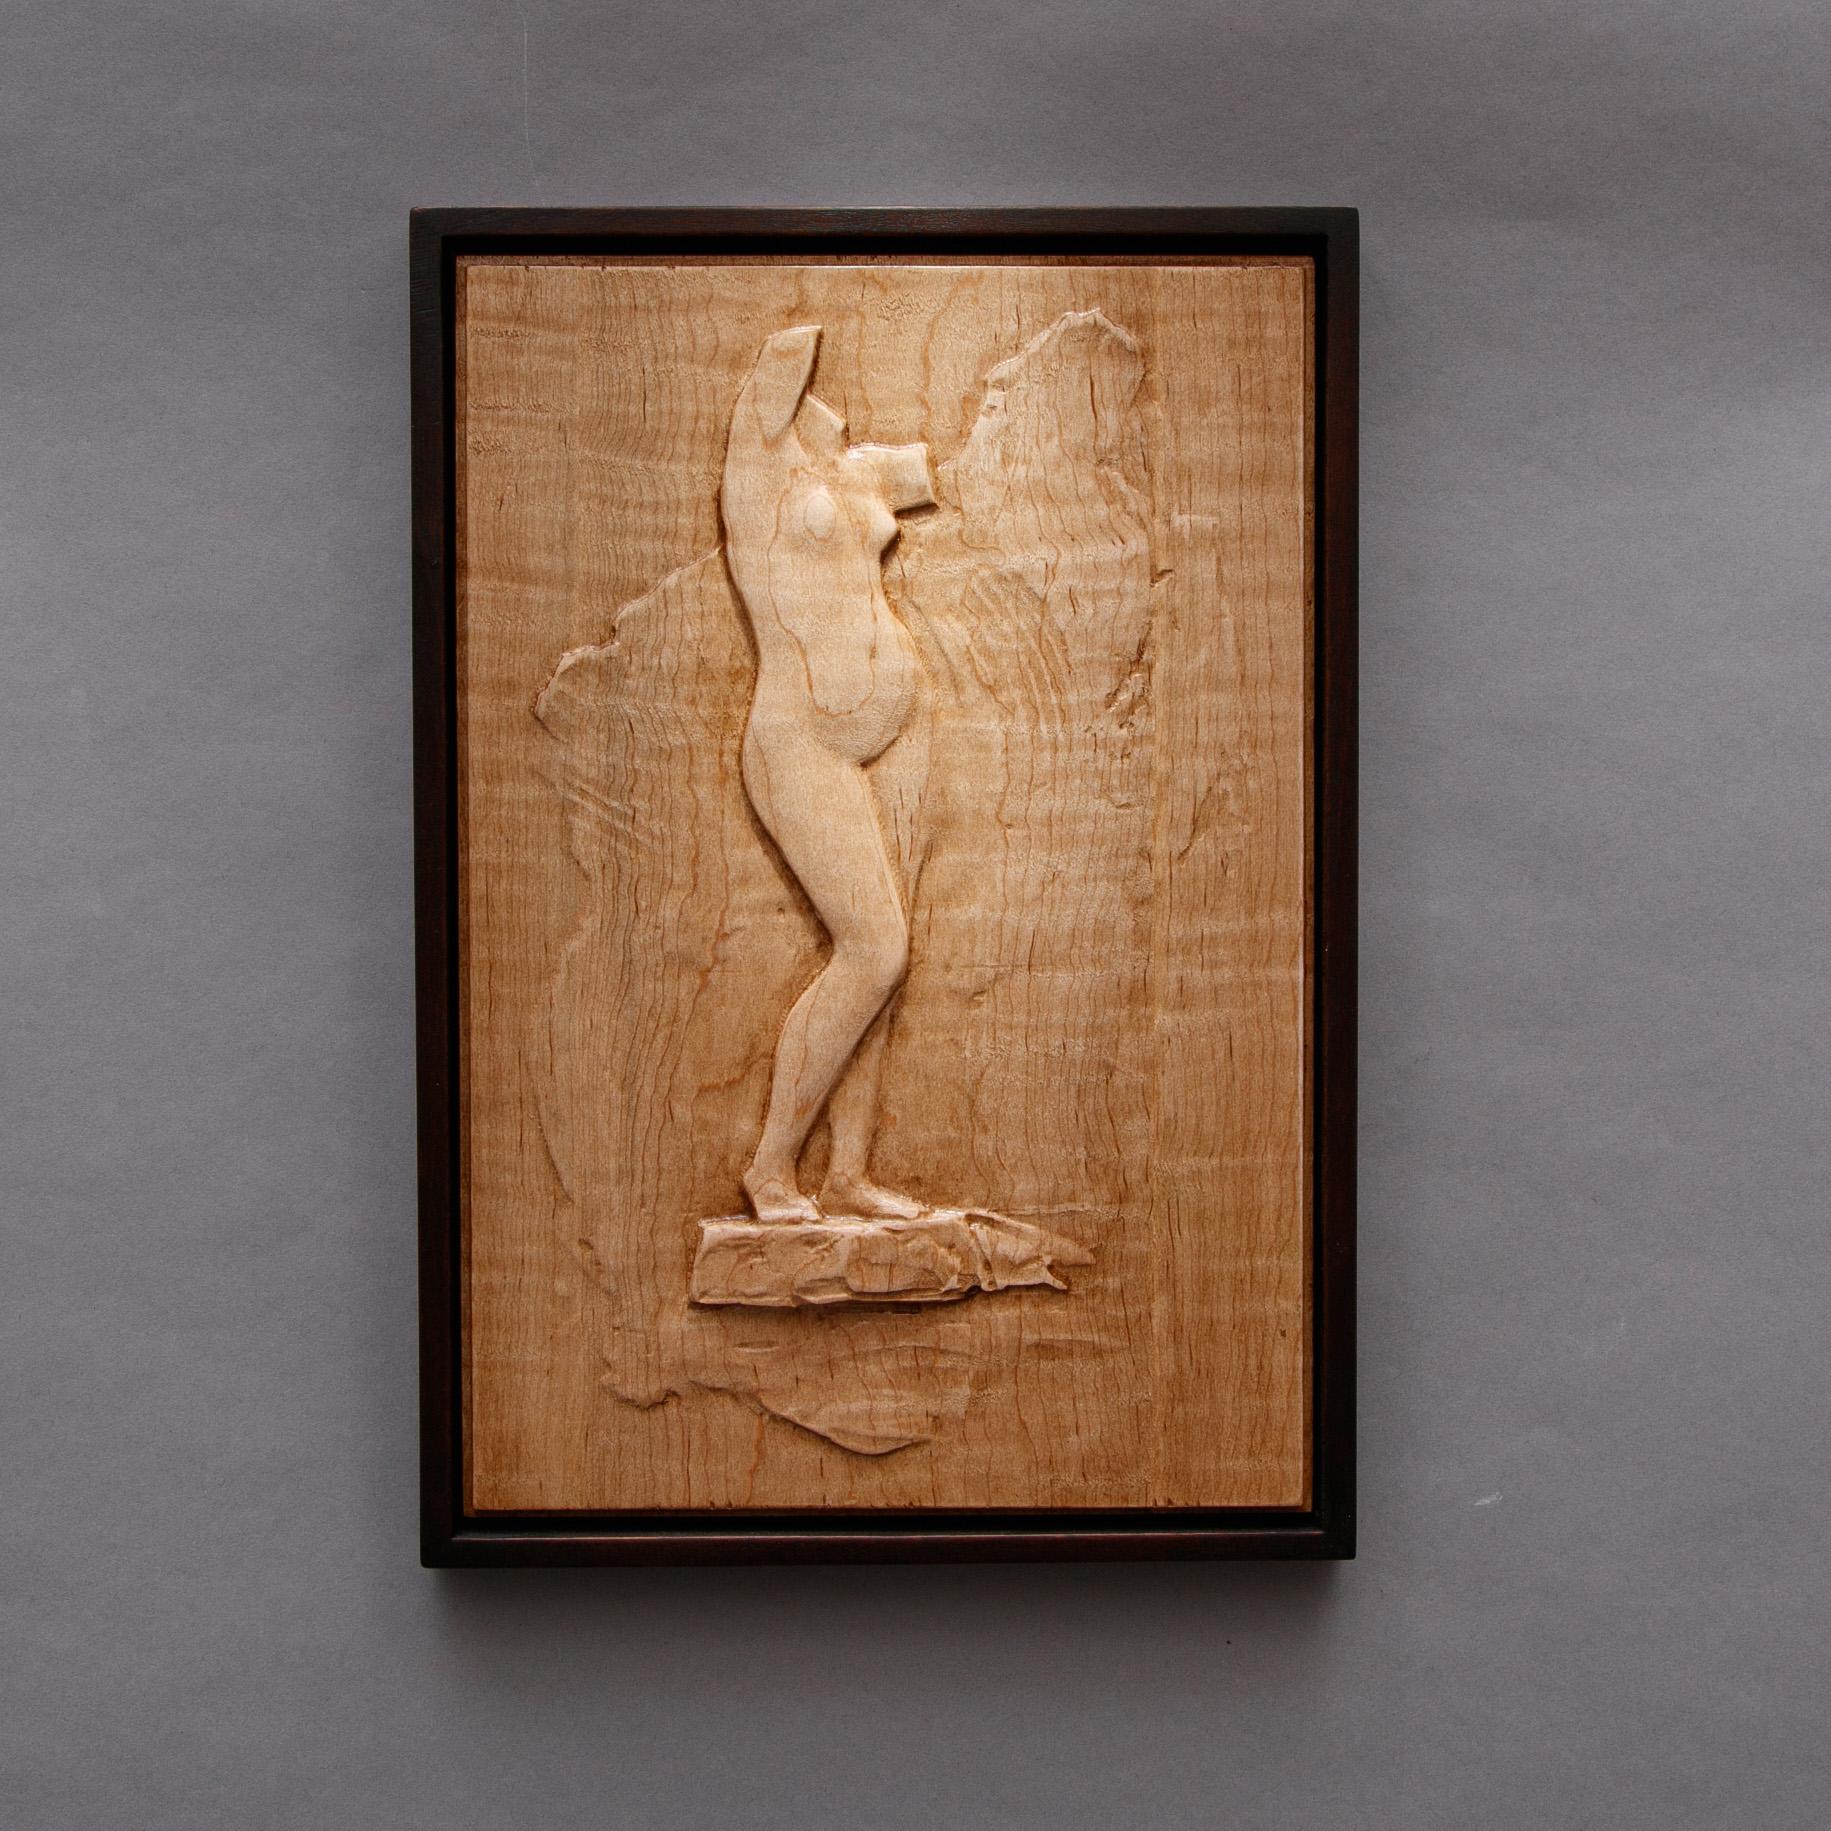 Basrelief-Skulptur „Frauenfigur“ – Sculpture von Dana Younger